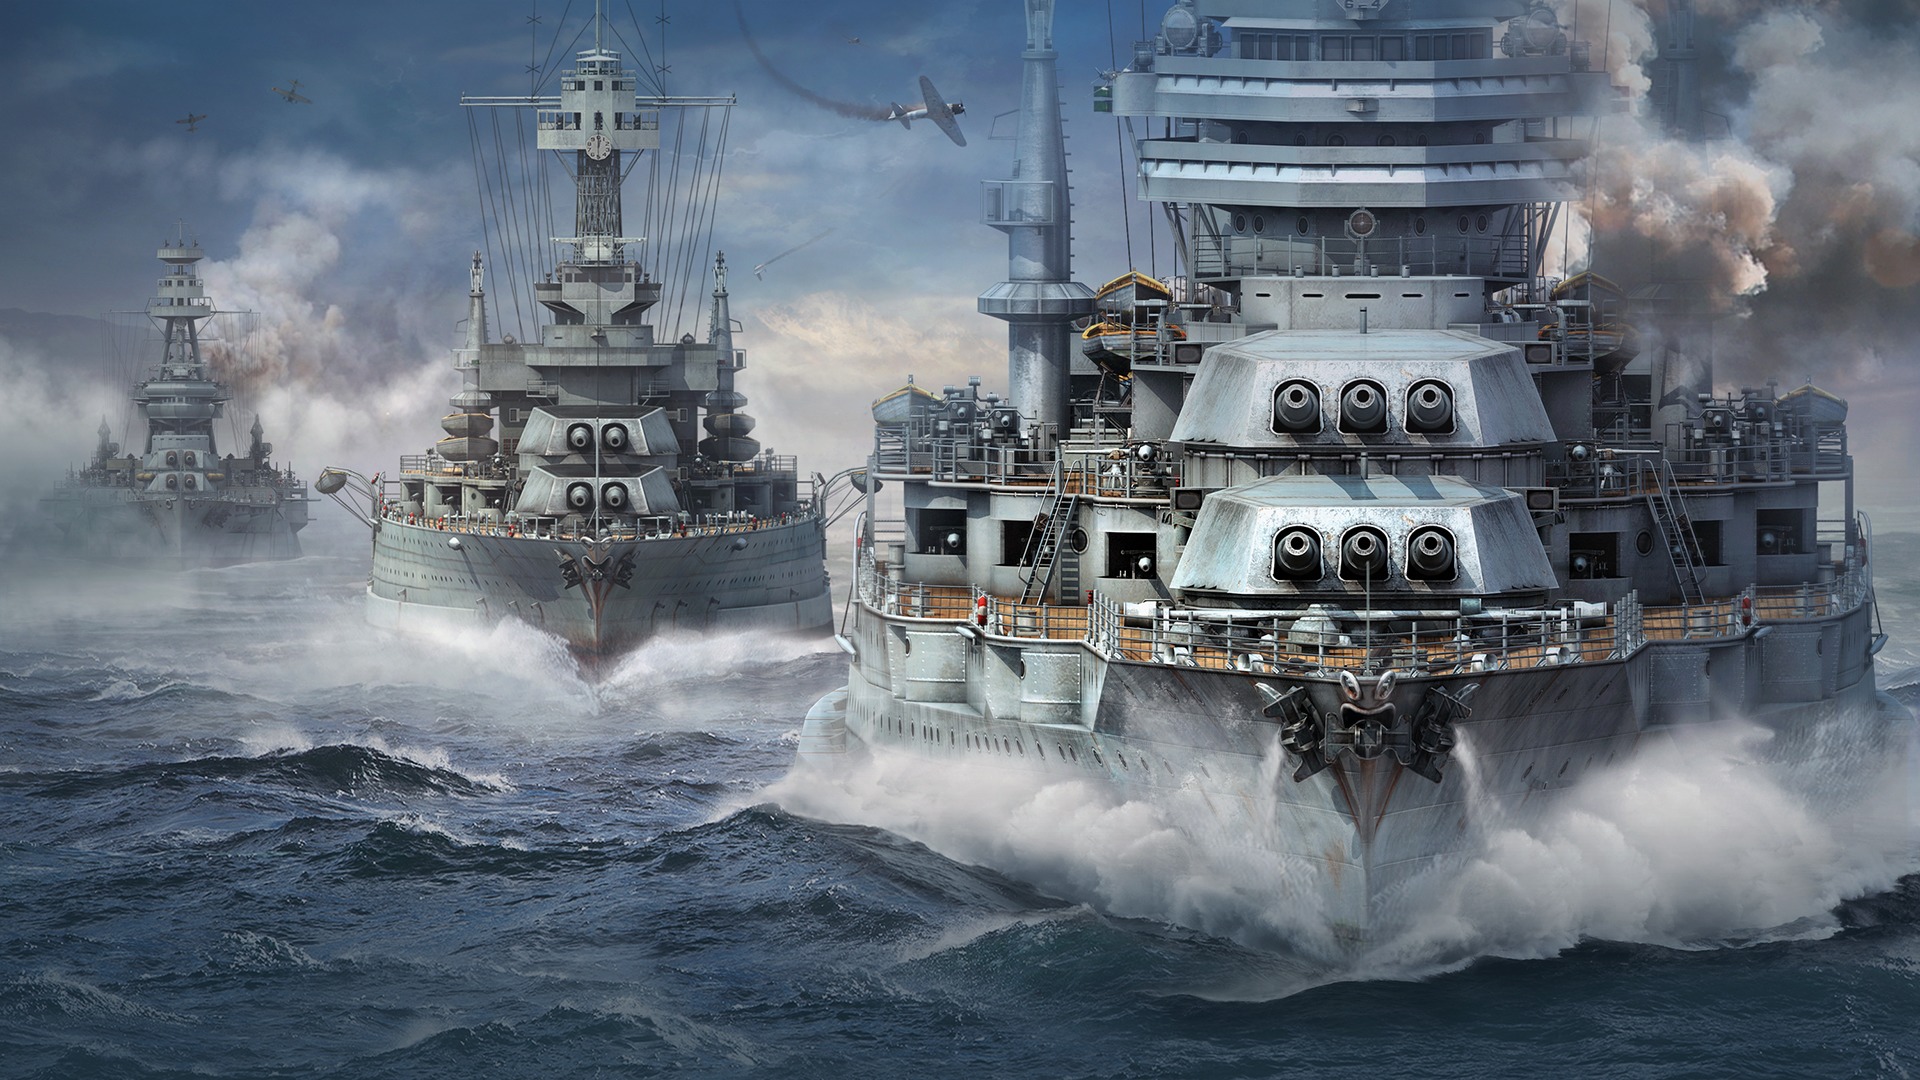 General 1920x1080 World of Warships  Battleships war ocean battle digital art military